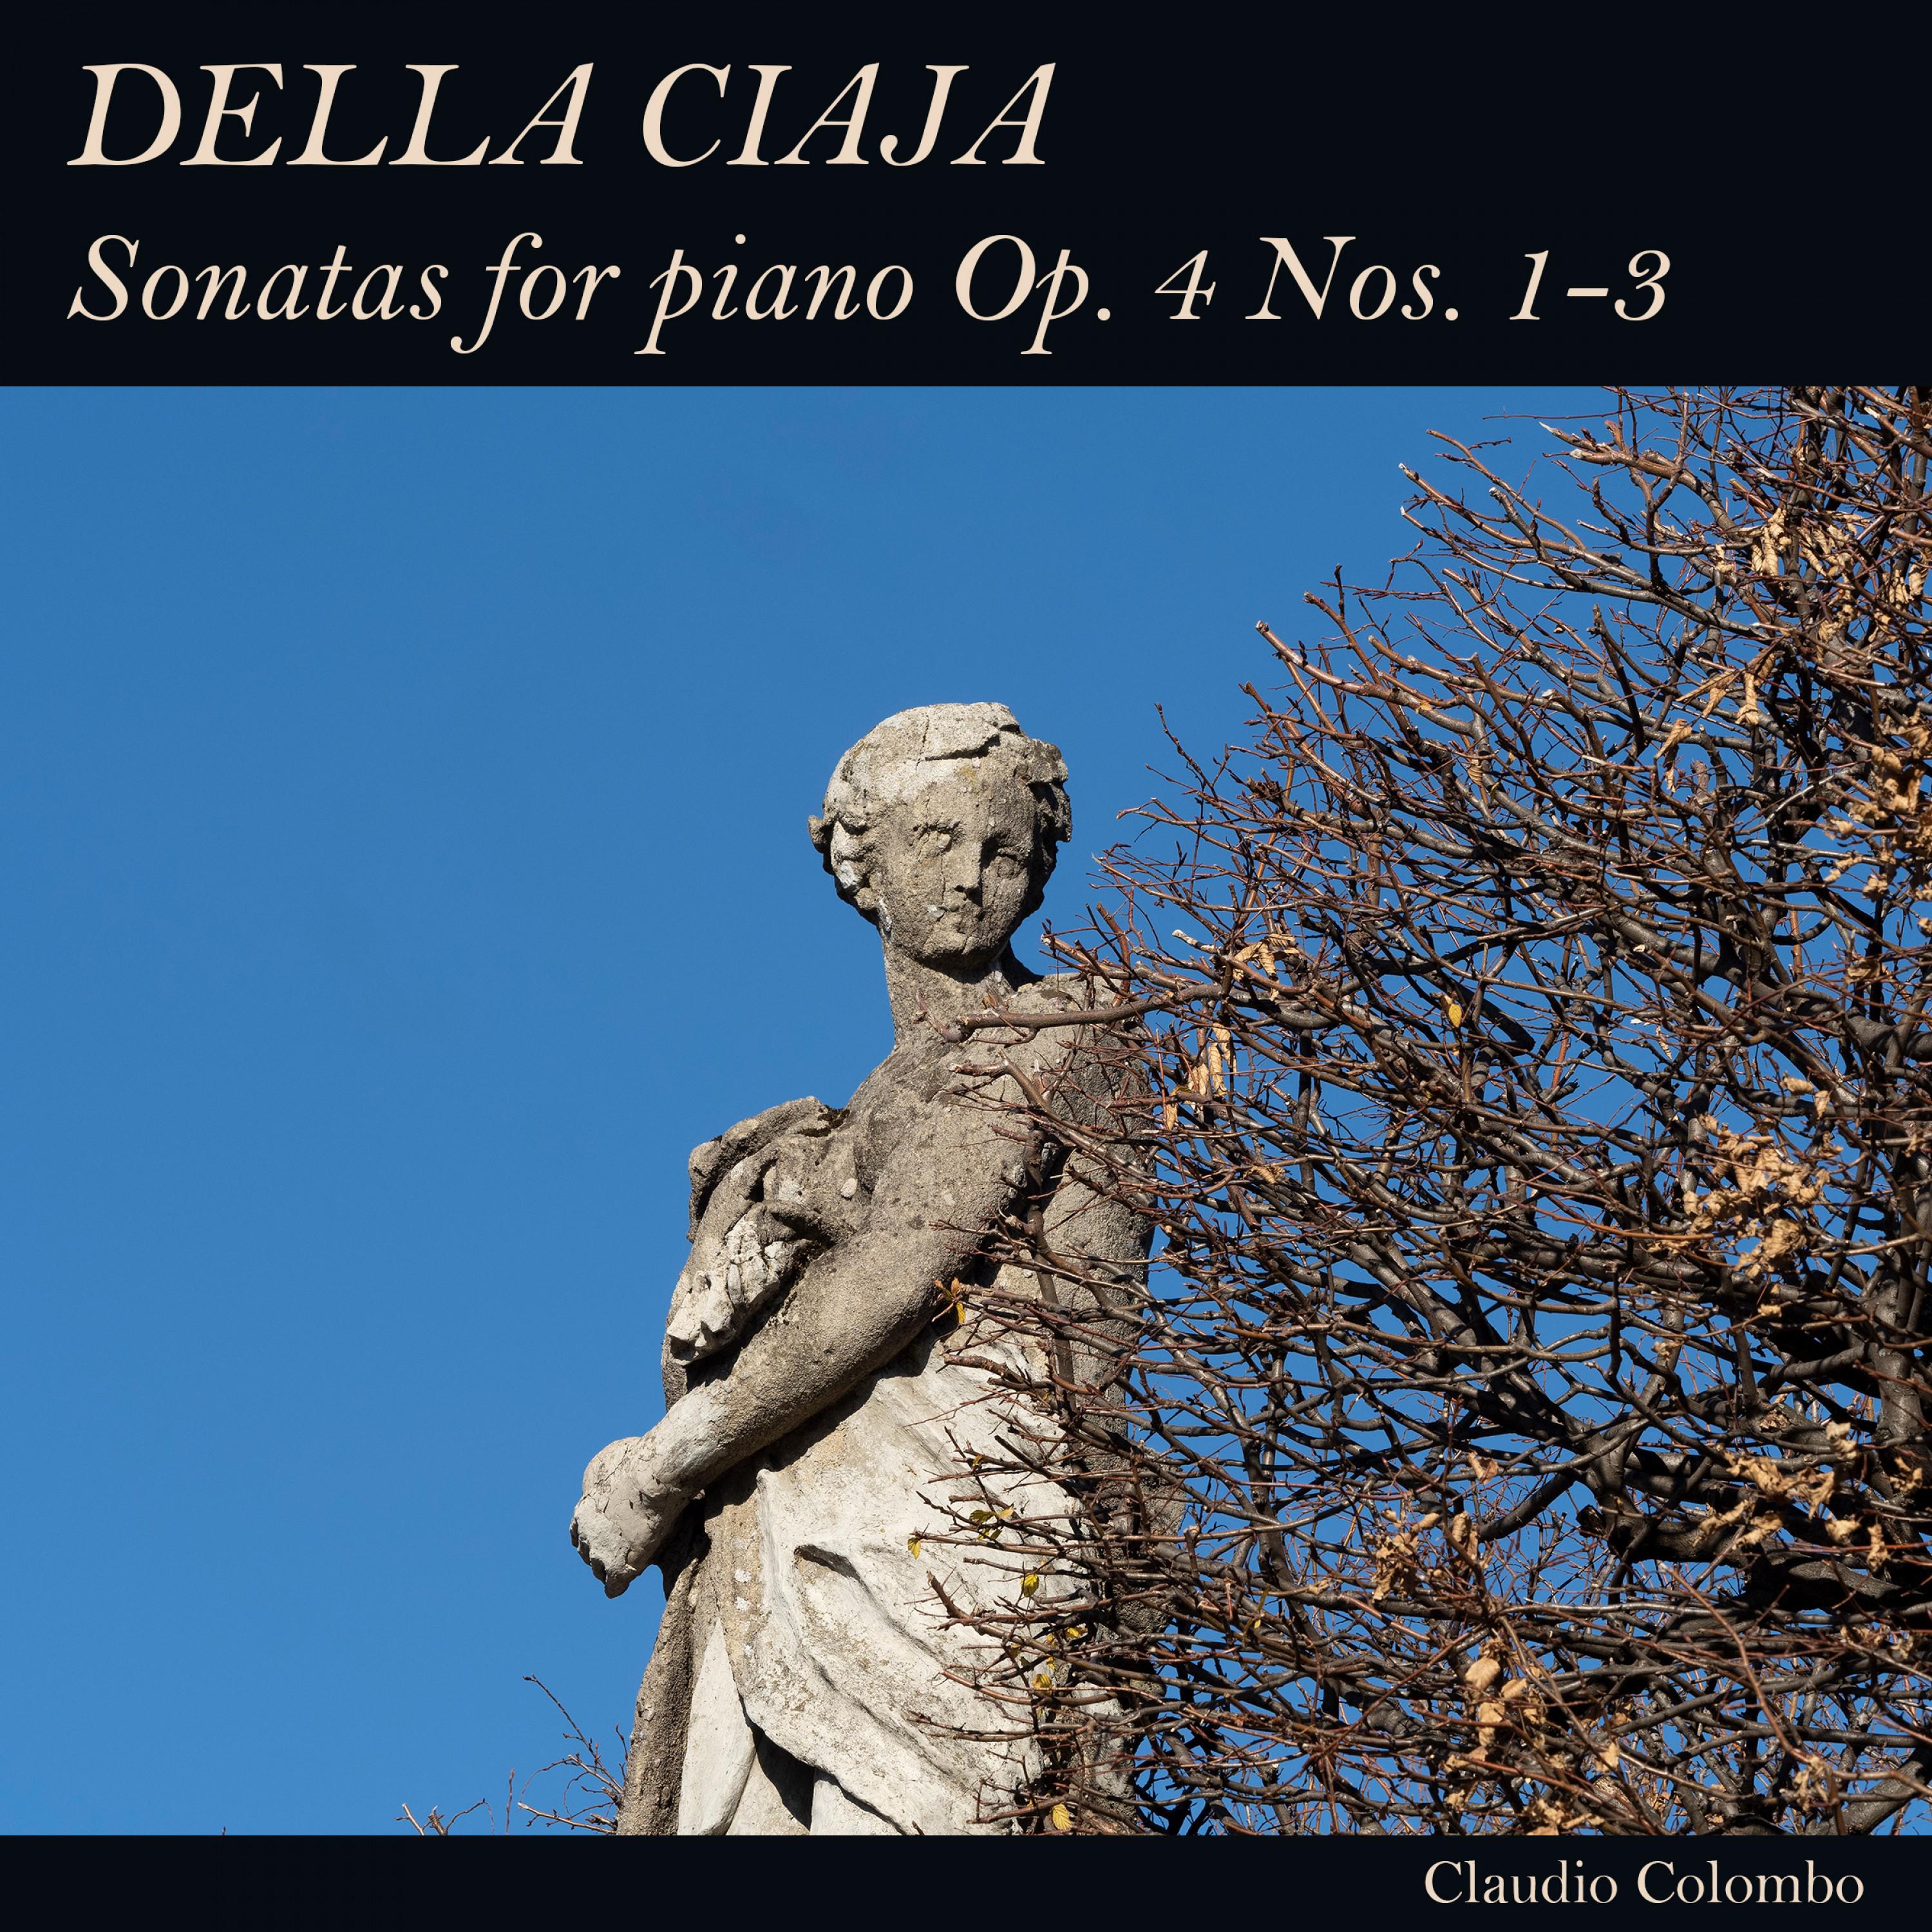 Sonata in F Major, Op. 4 No. 2: I. Toccata